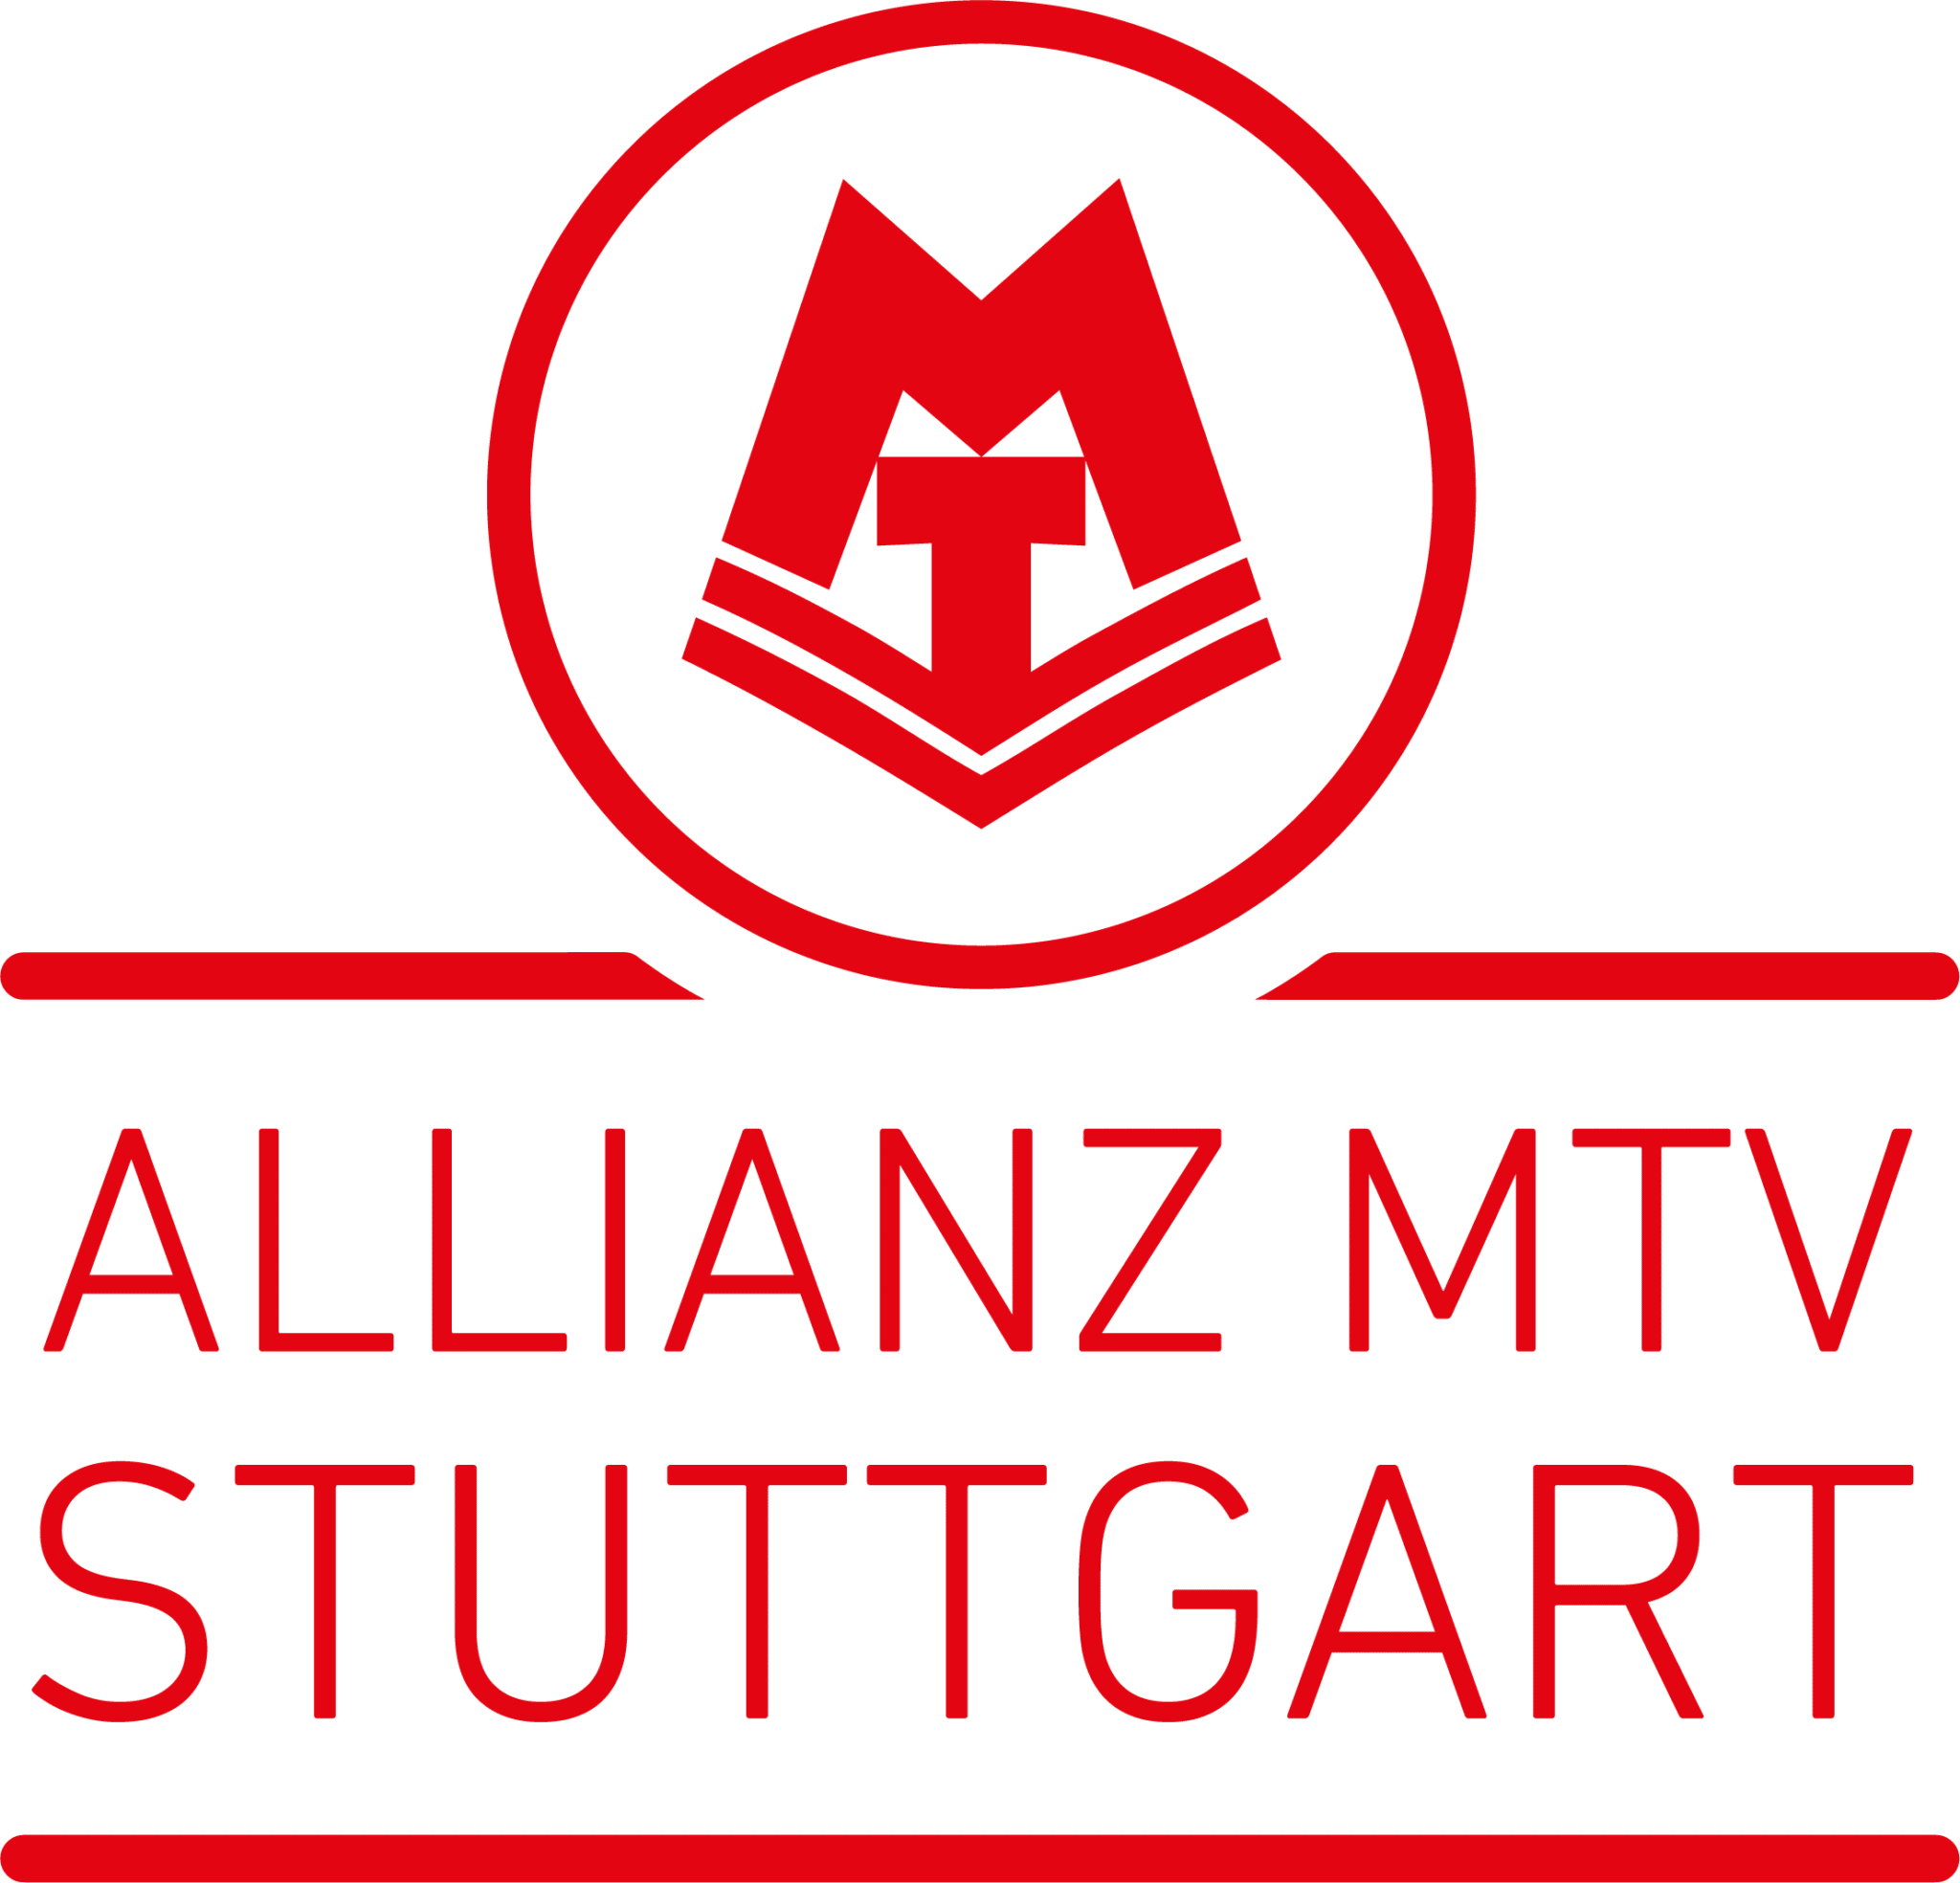 allianz mtv stg logo2017 4c